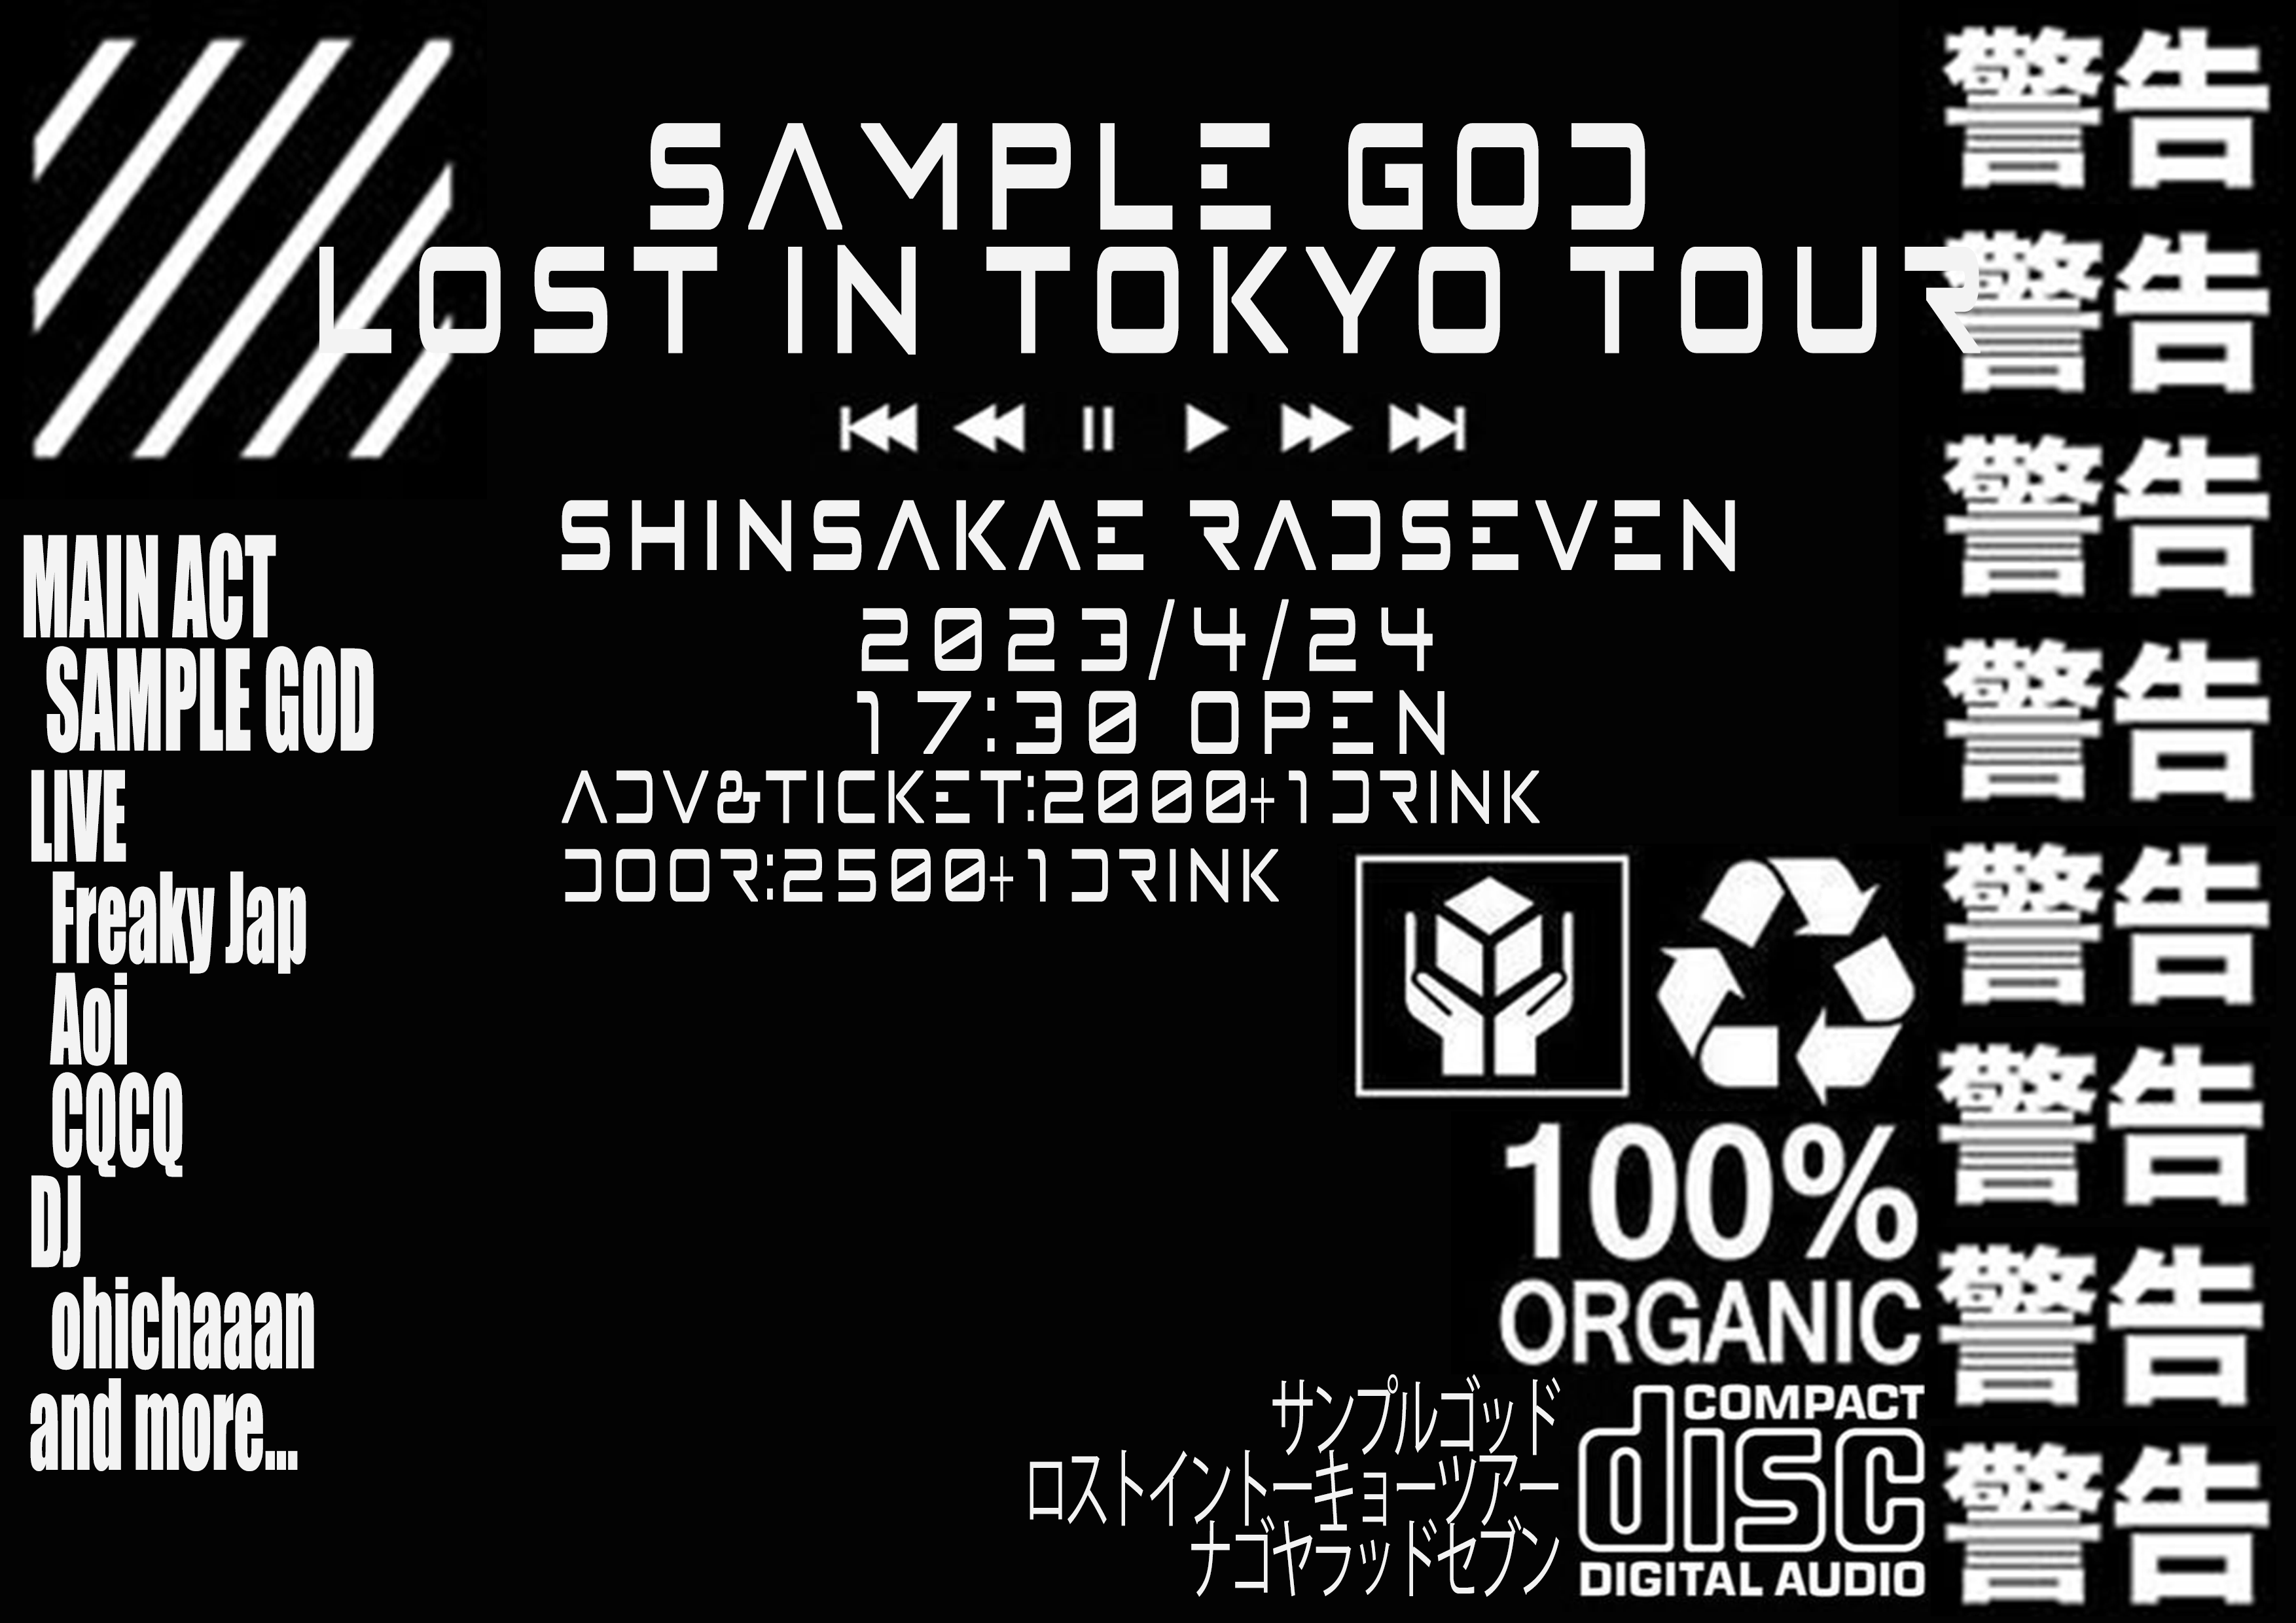 SAMPLE GOD "LOST IN TOKYO TOUR"